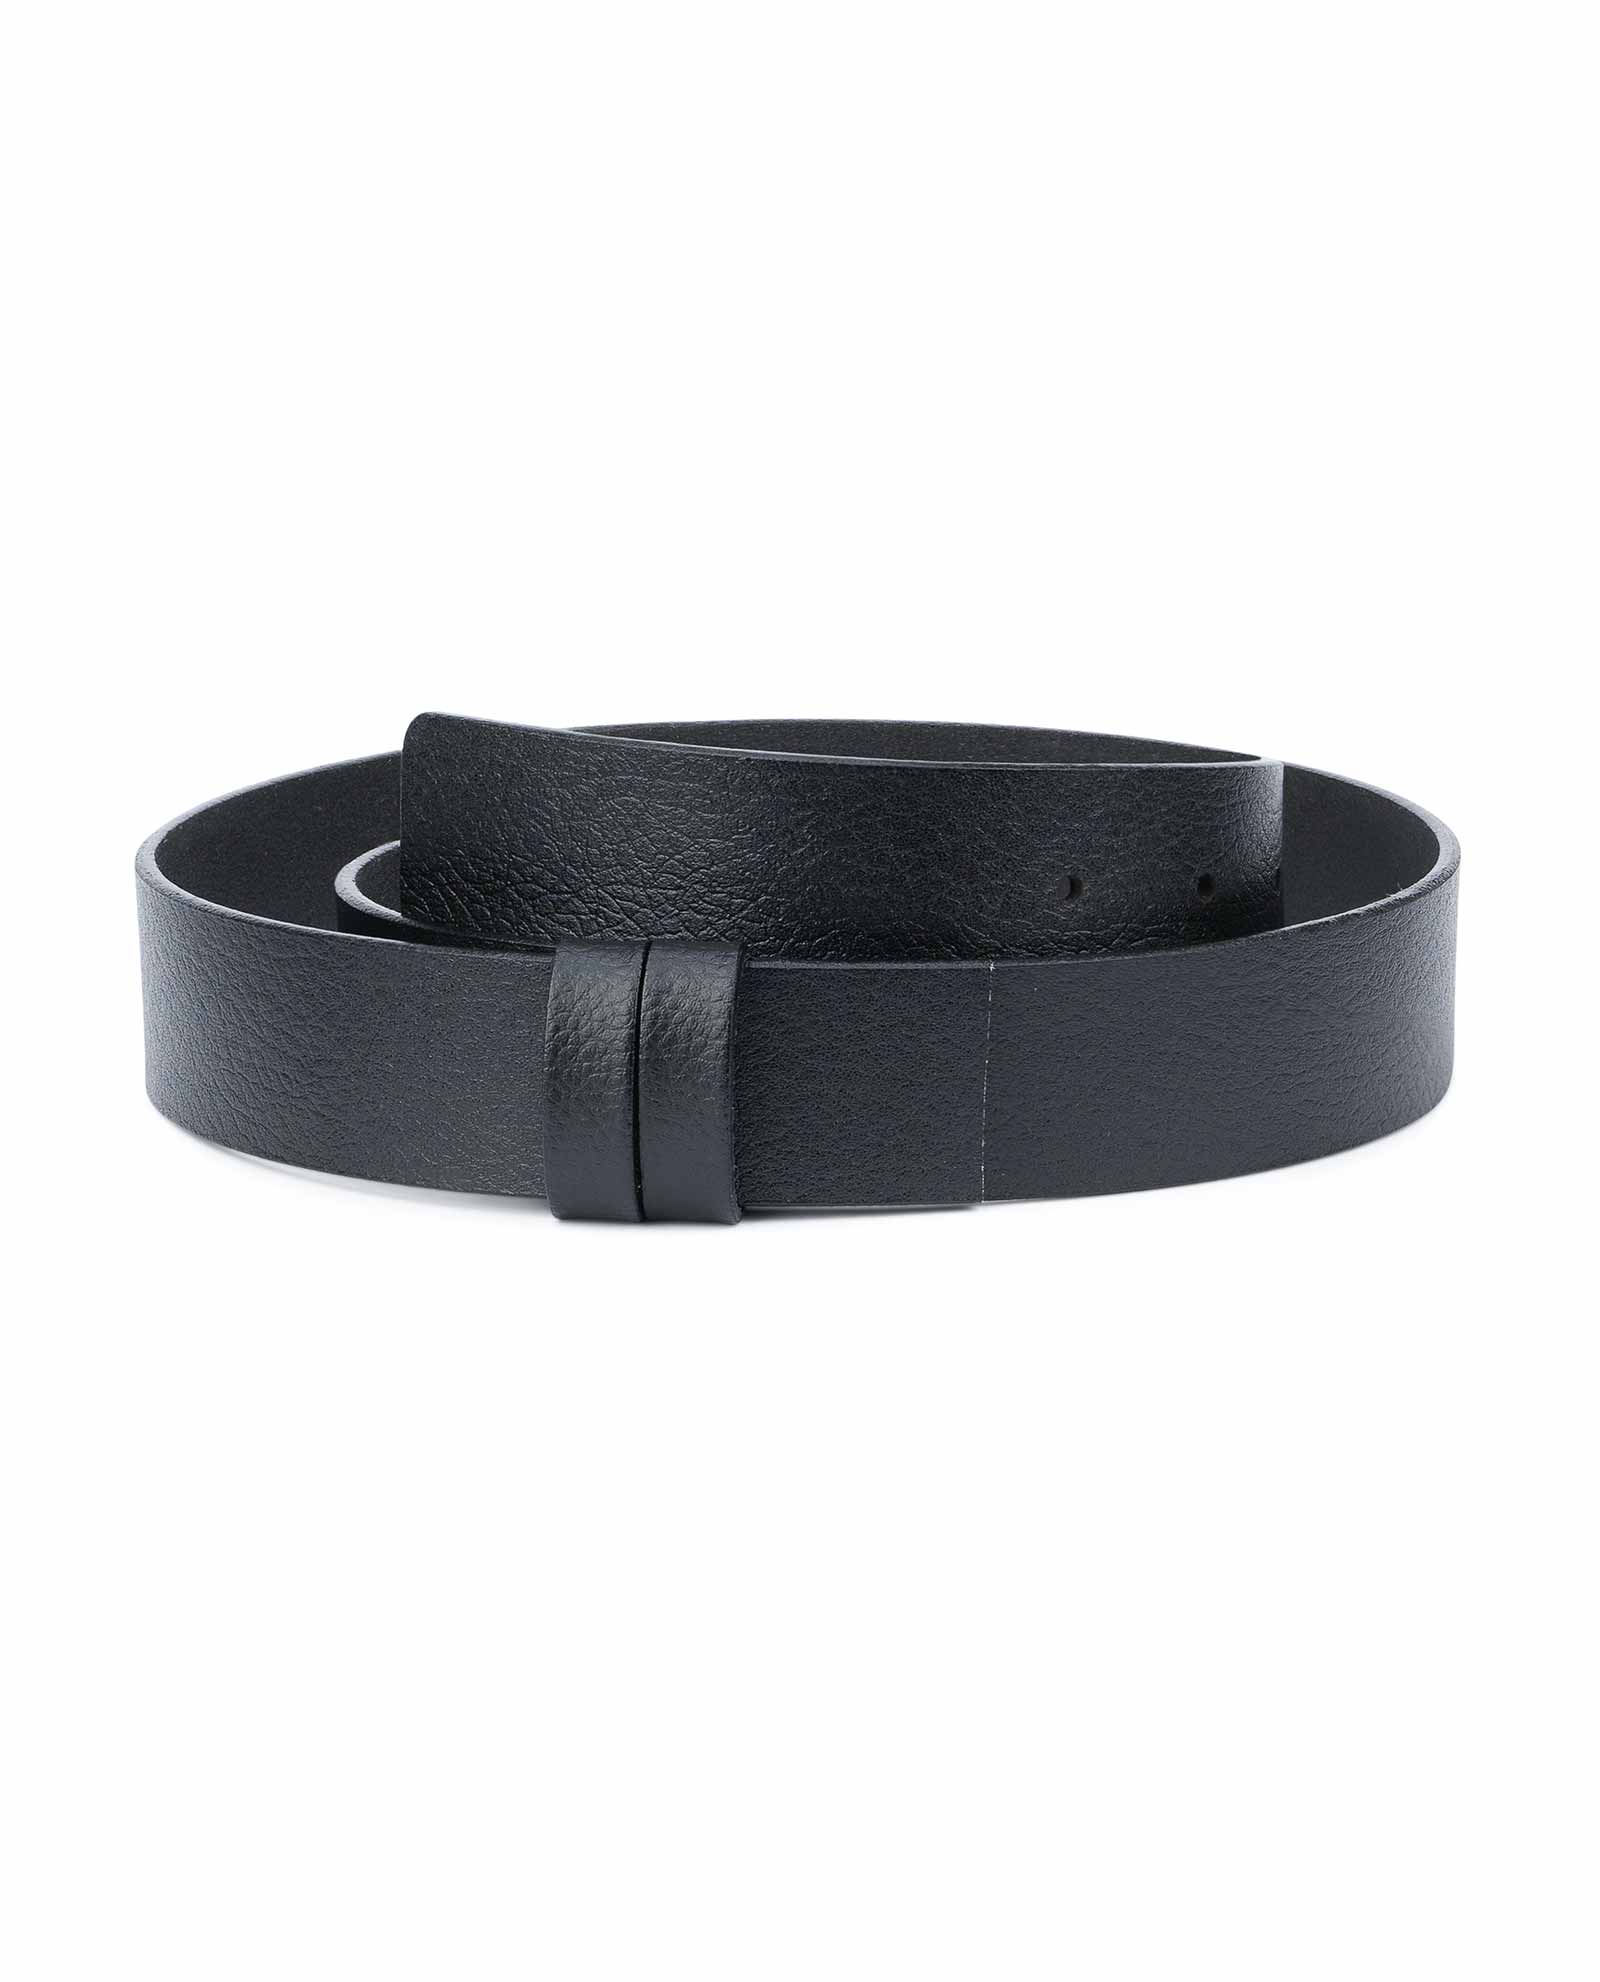 Buy Black Leather Belt No Buckle | Replacement | LeatherBeltsOnline.com